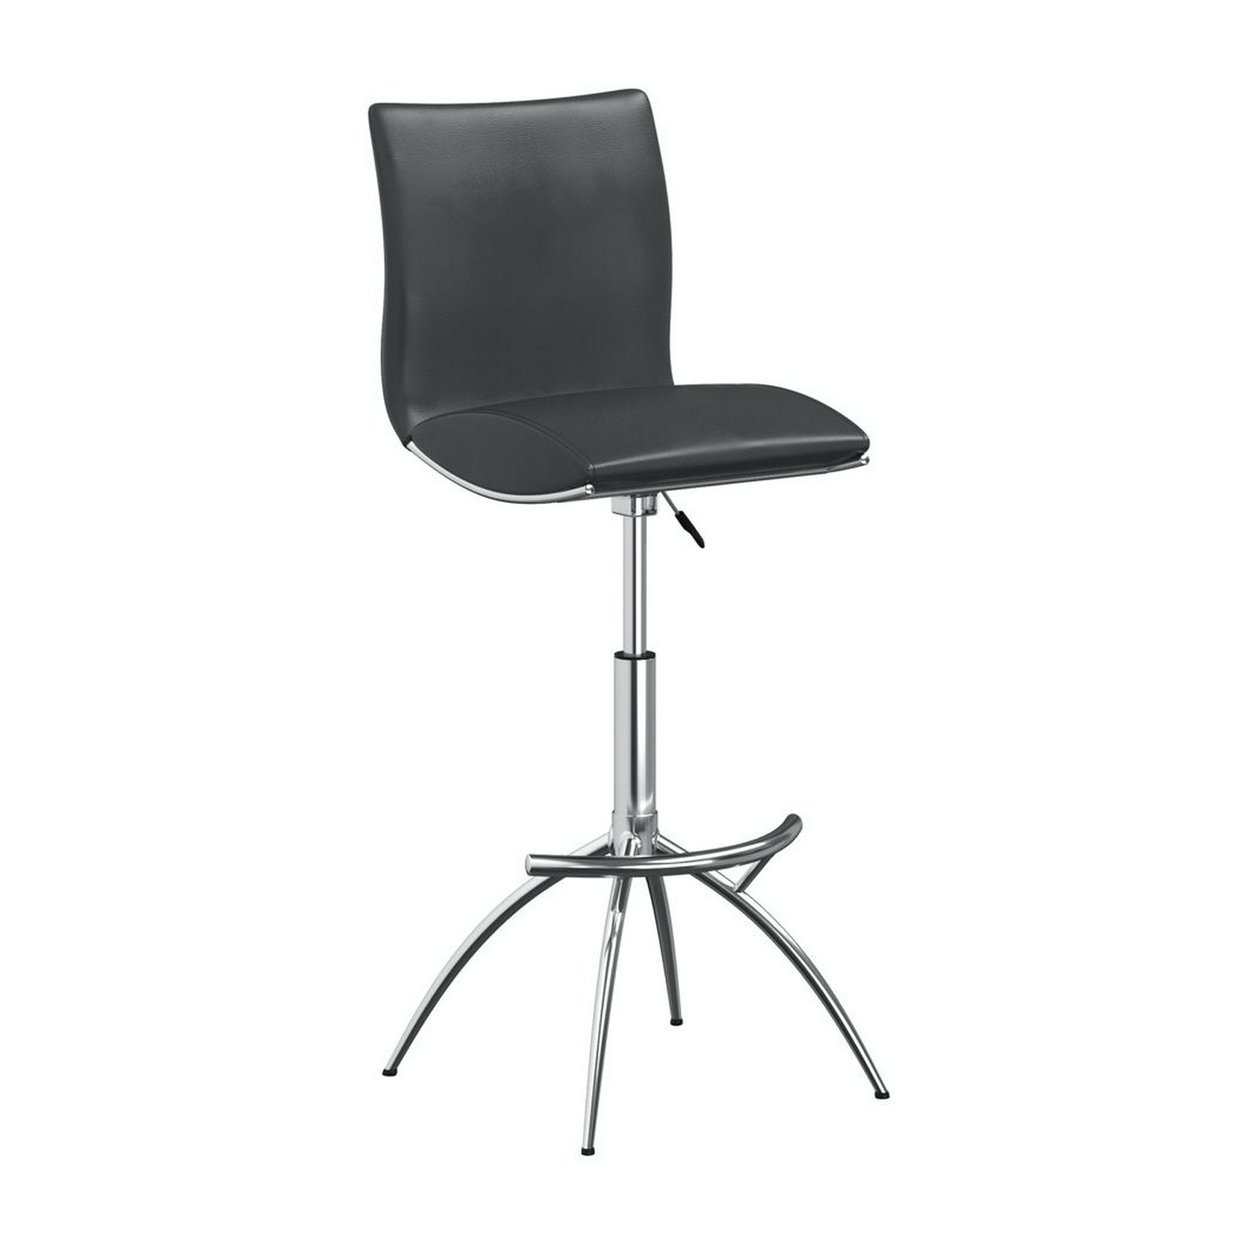 Deko 26-31 Inch Adjustable Height Barstool Chair, Set Of 2, Chrome, Gray Faux Leather - Saltoro Sherpi